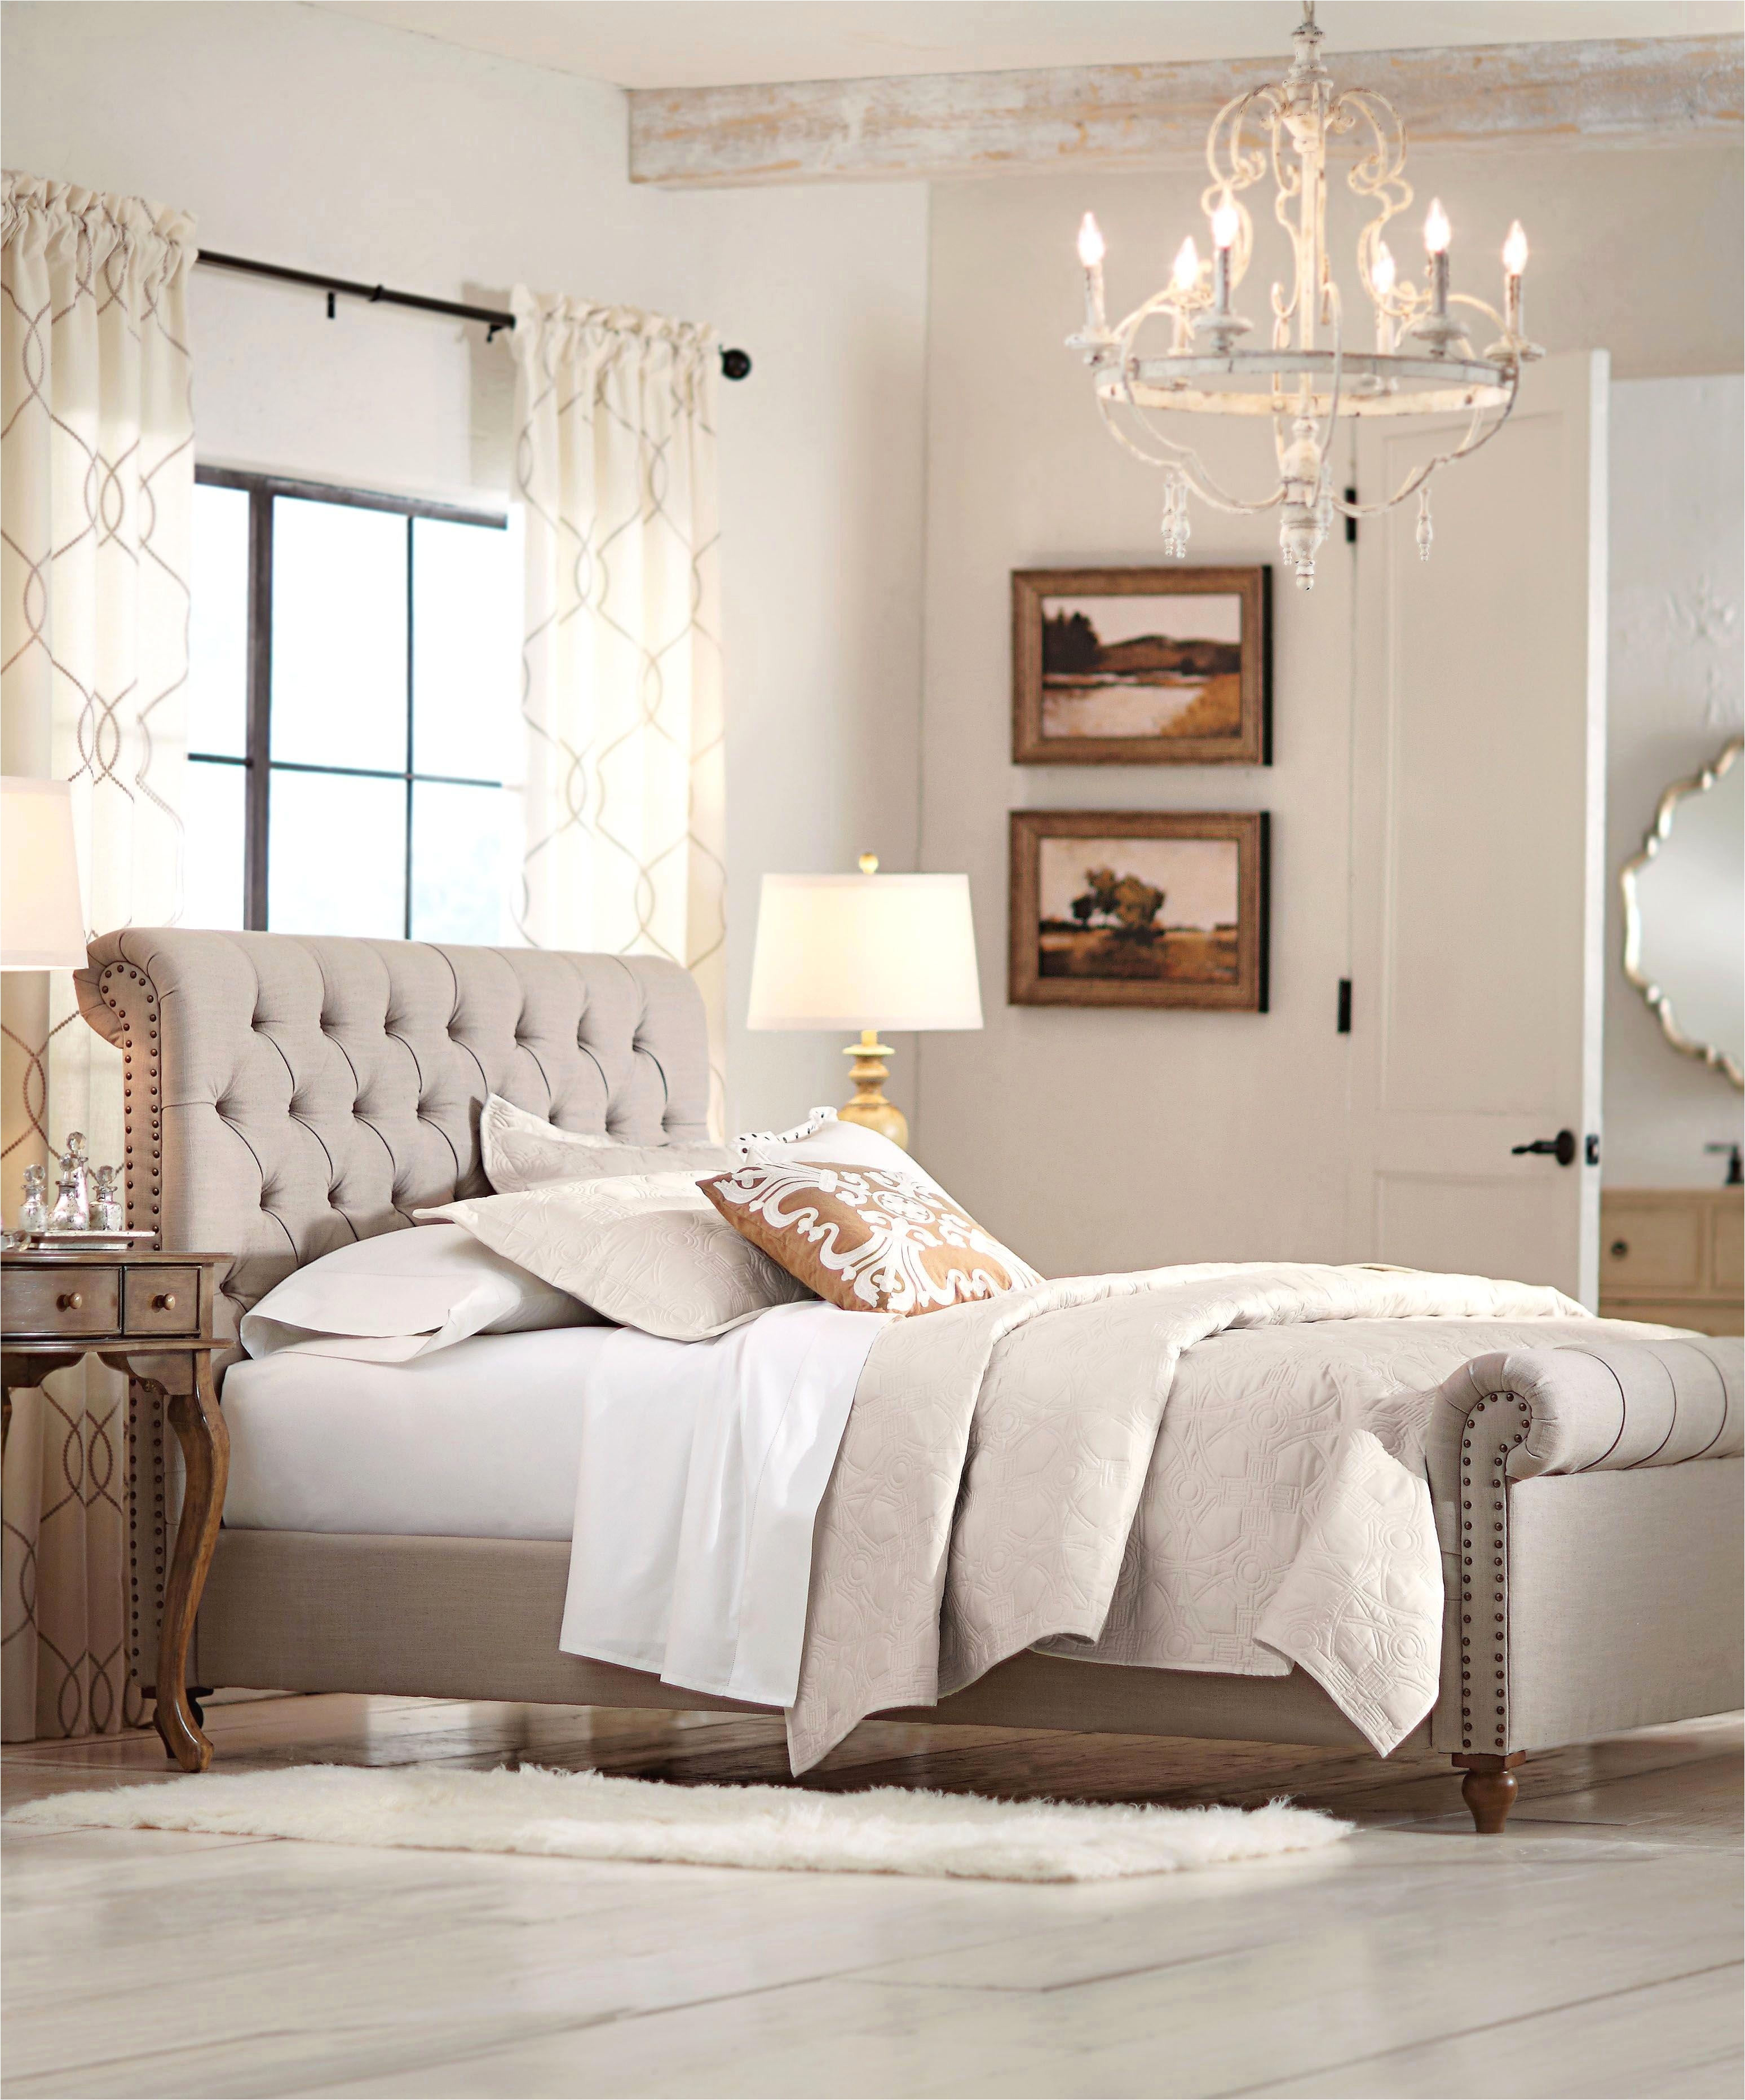 macys bedroom furniture lovely 50 luxury macys sofa bed 50 s of macys bedroom furniture jpeg